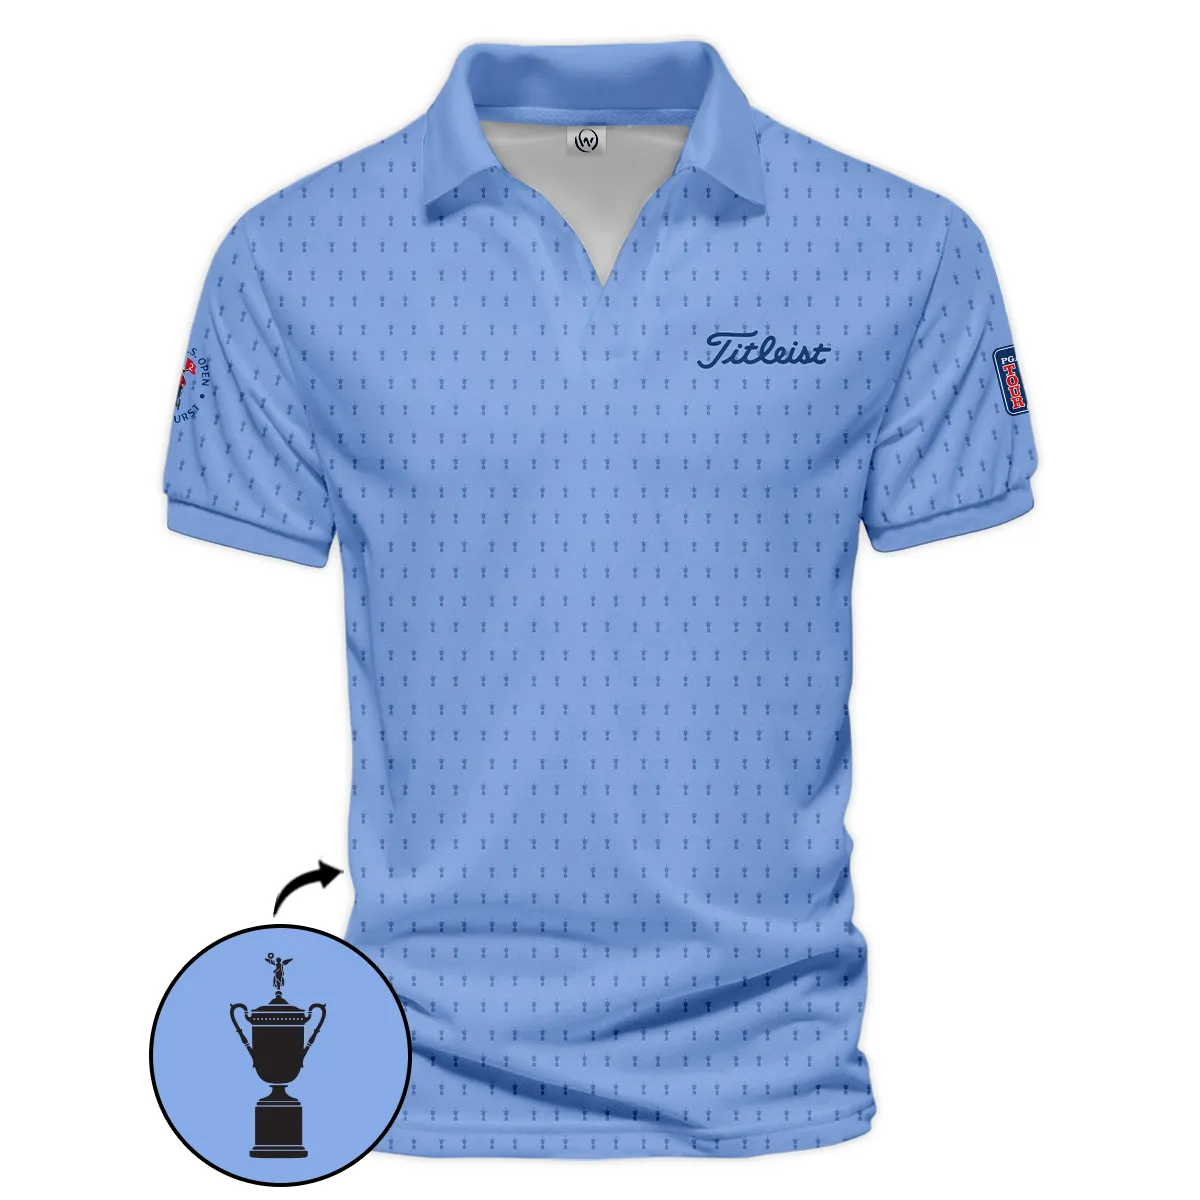 Golf Pattern Cup Blue 124th U.S. Open Pinehurst Pinehurst Titleist Vneck Polo Shirt Style Classic